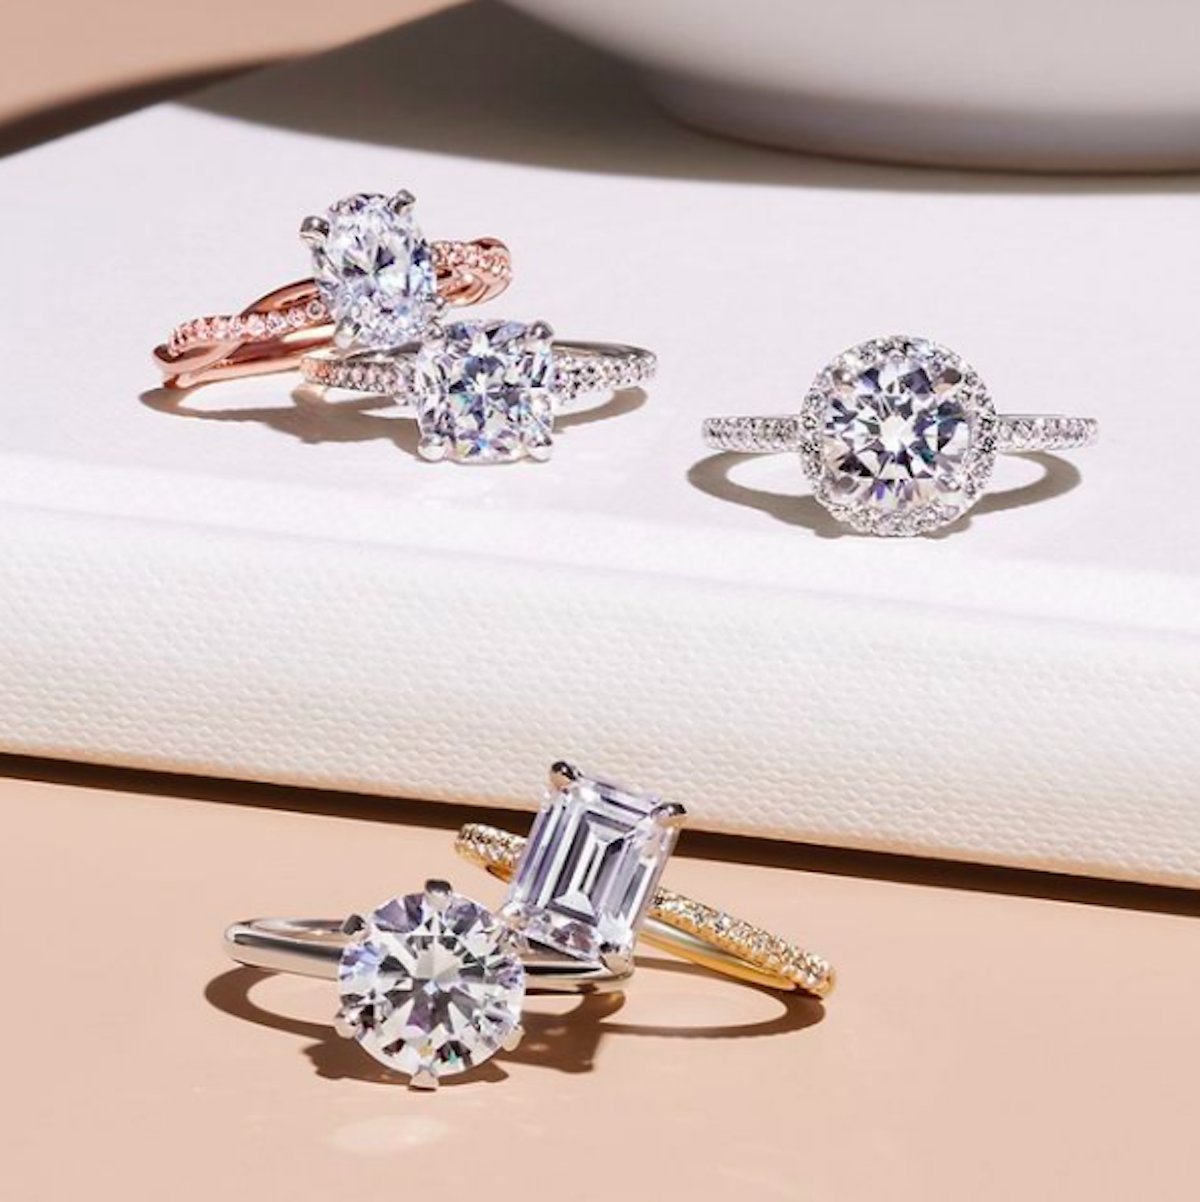 1 Carat Diamond Rings for Wedding & Engagement